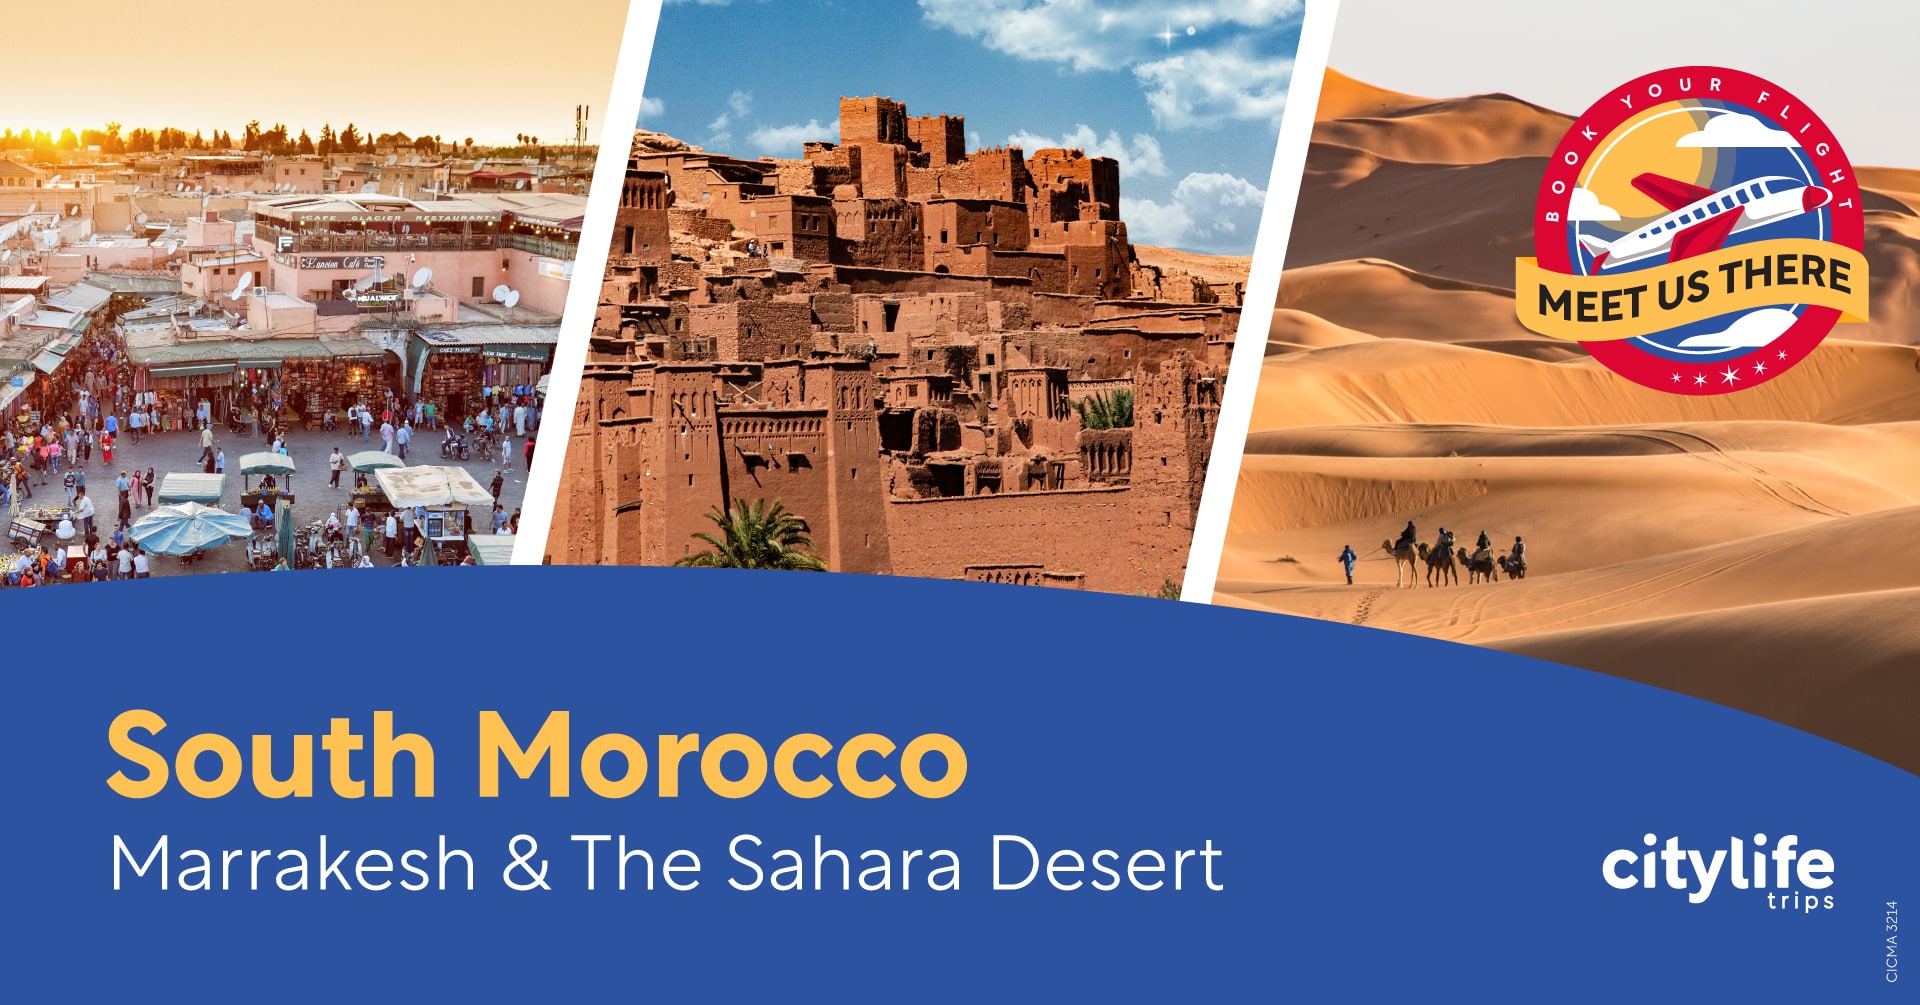 fb-event-south-morocco-marrakech-sahara-desert-citylife-madrid